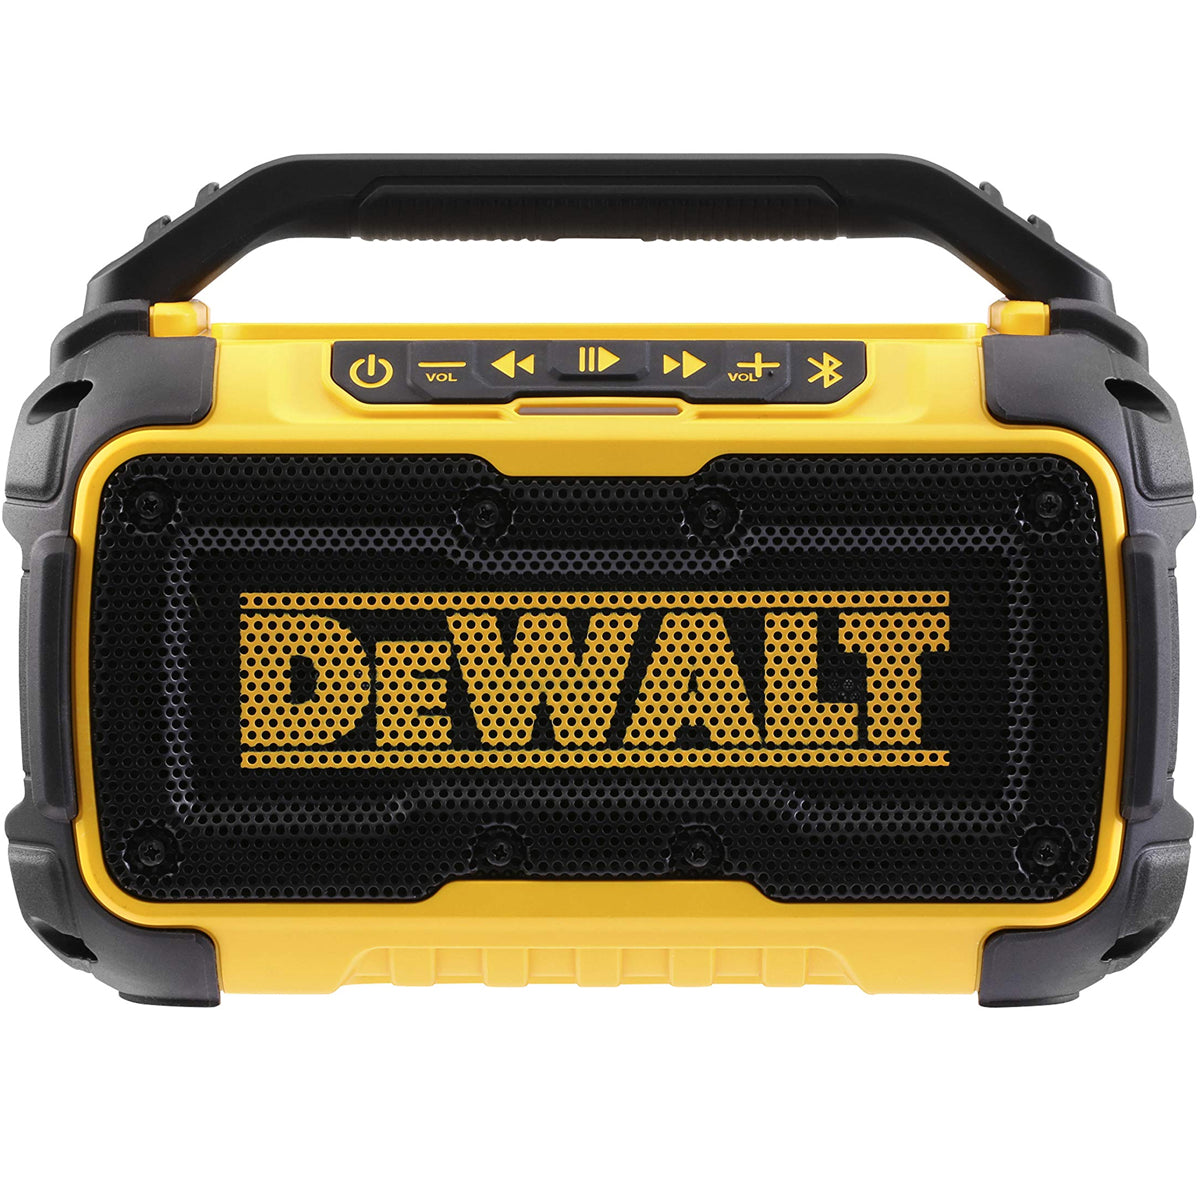 DeWalt DCR011 10.8v/18v/54v Li-ion Bluetooth Speaker Body Only